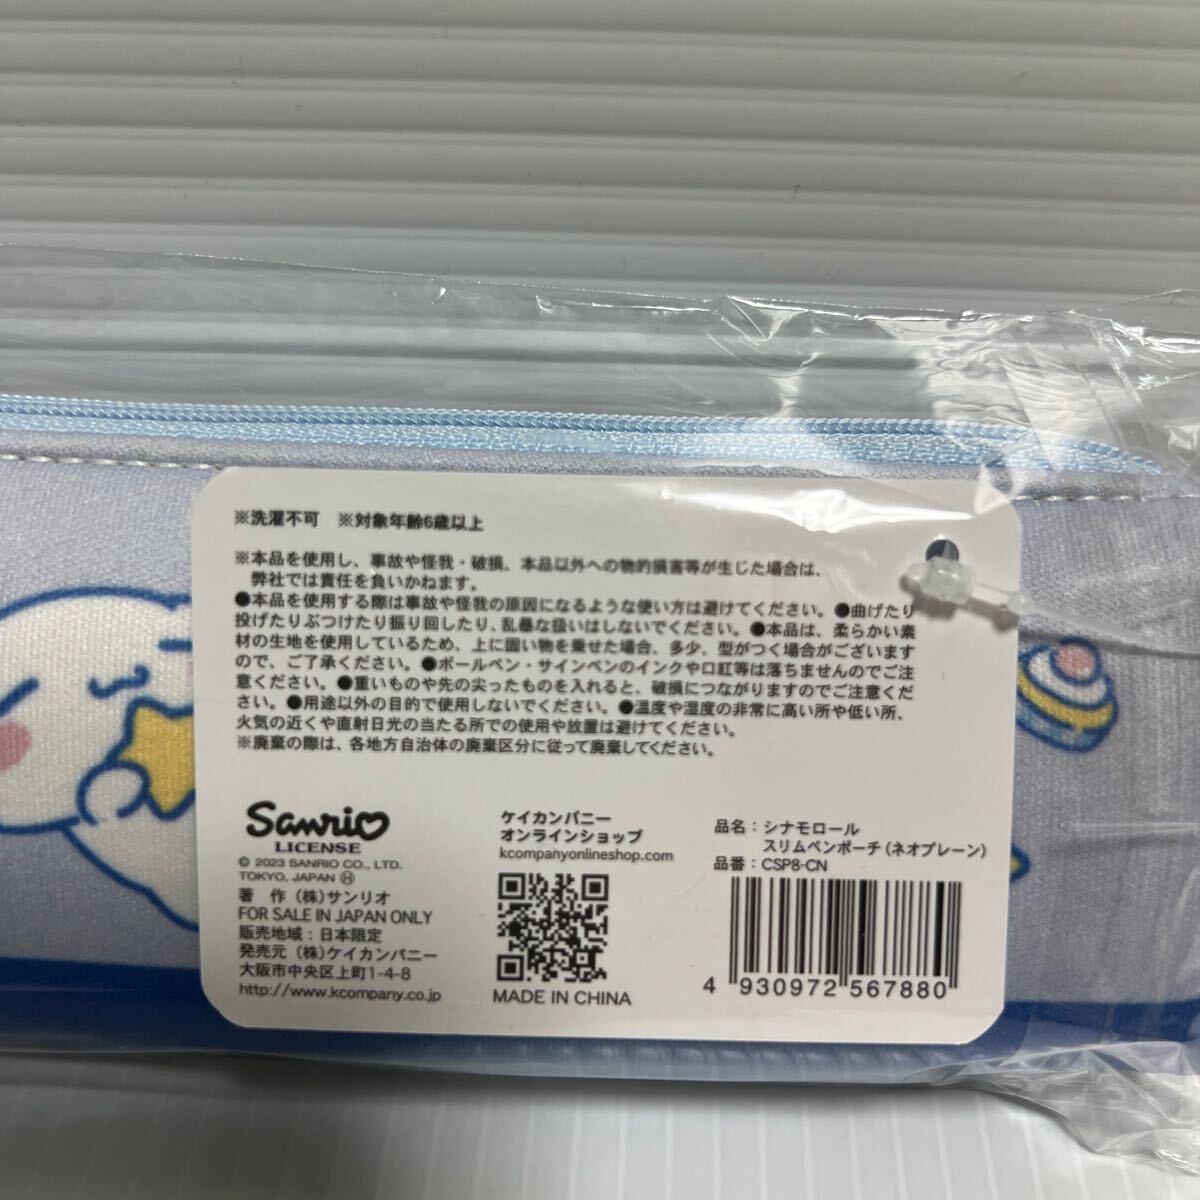  Sanrio sina Monroe ru slim pen pouch ( Neo b lane ) unused unopened 